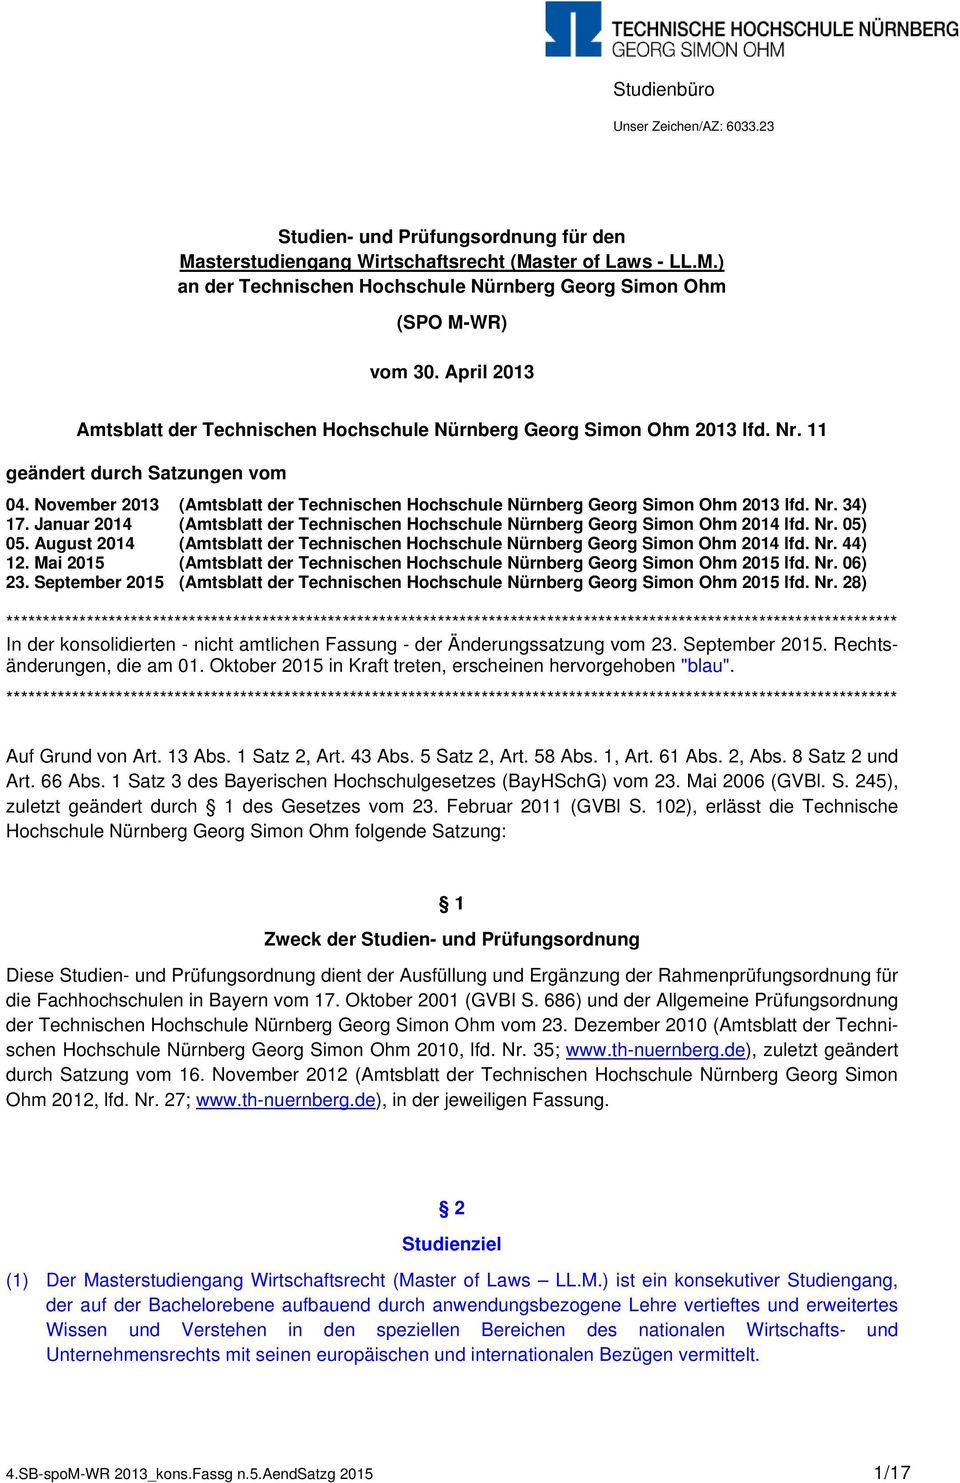 November 2013 (Amtsblatt der Technischen Hochschule Nürnberg Georg Simon Ohm 2013 lfd. Nr. 34) 17. Januar 2014 (Amtsblatt der Technischen Hochschule Nürnberg Georg Simon Ohm 2014 lfd. Nr. 05) 05.